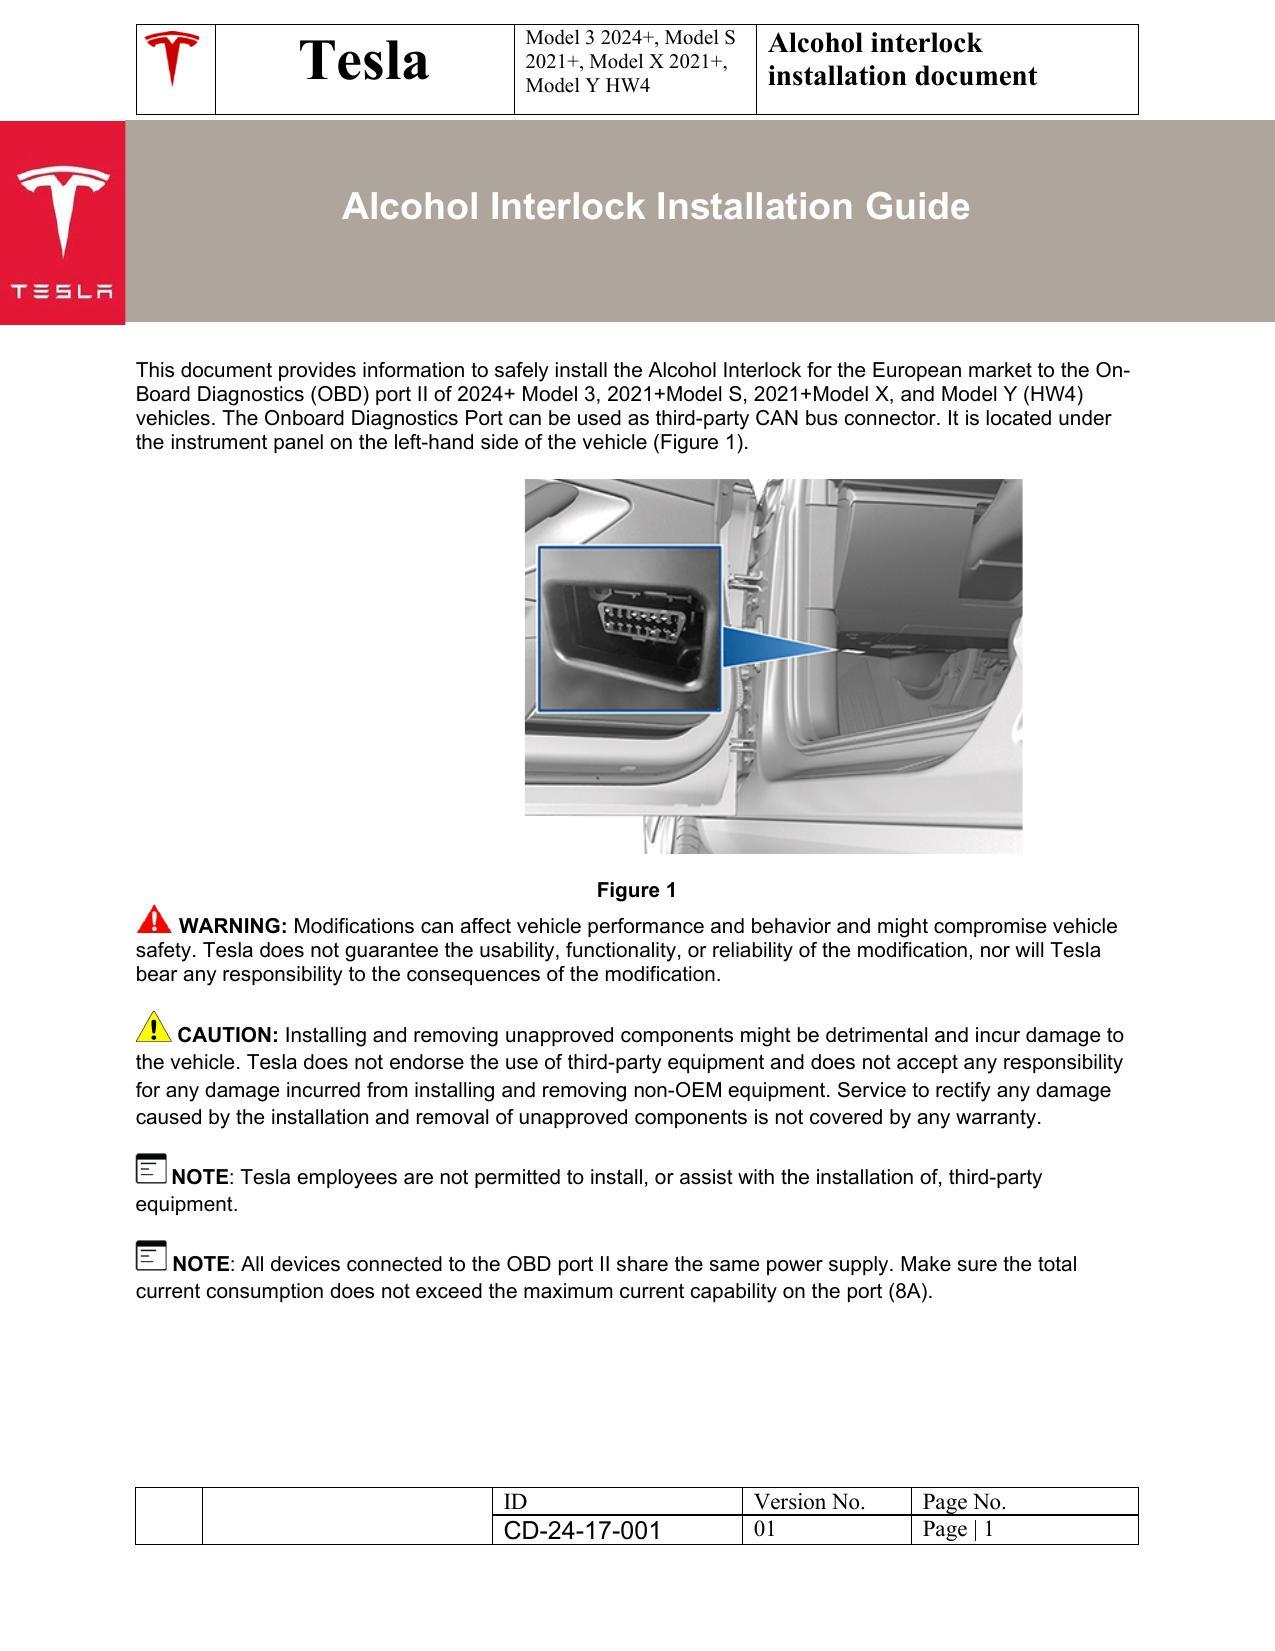 alcohol-interlock-installation-guide-for-tesla-model-3-2024-model-s-2021-model-x-2021-and-model-y-hw4.pdf